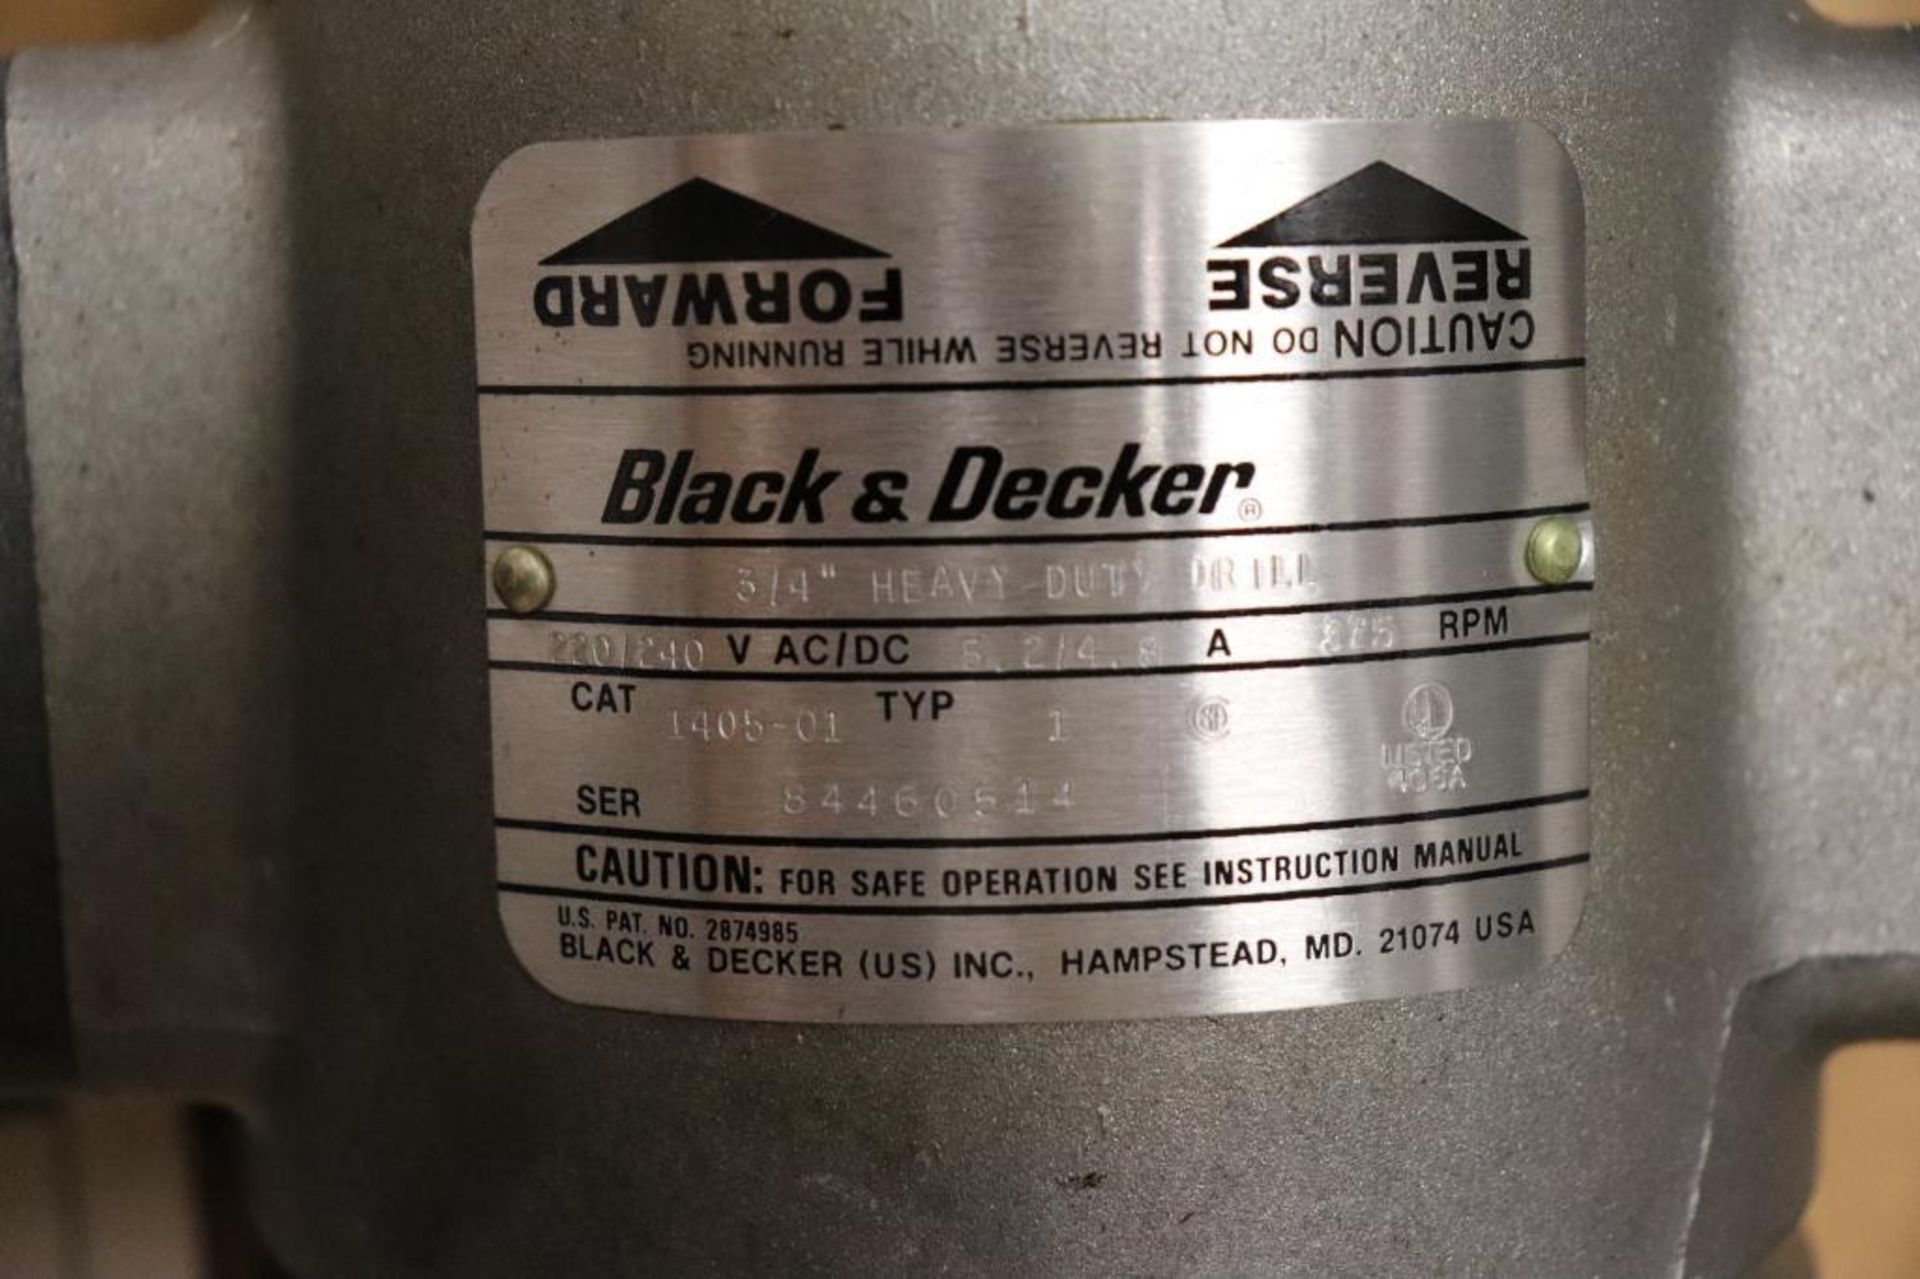 Black & Decker 1405-01 3/4" heavy duty drill - Image 4 of 8